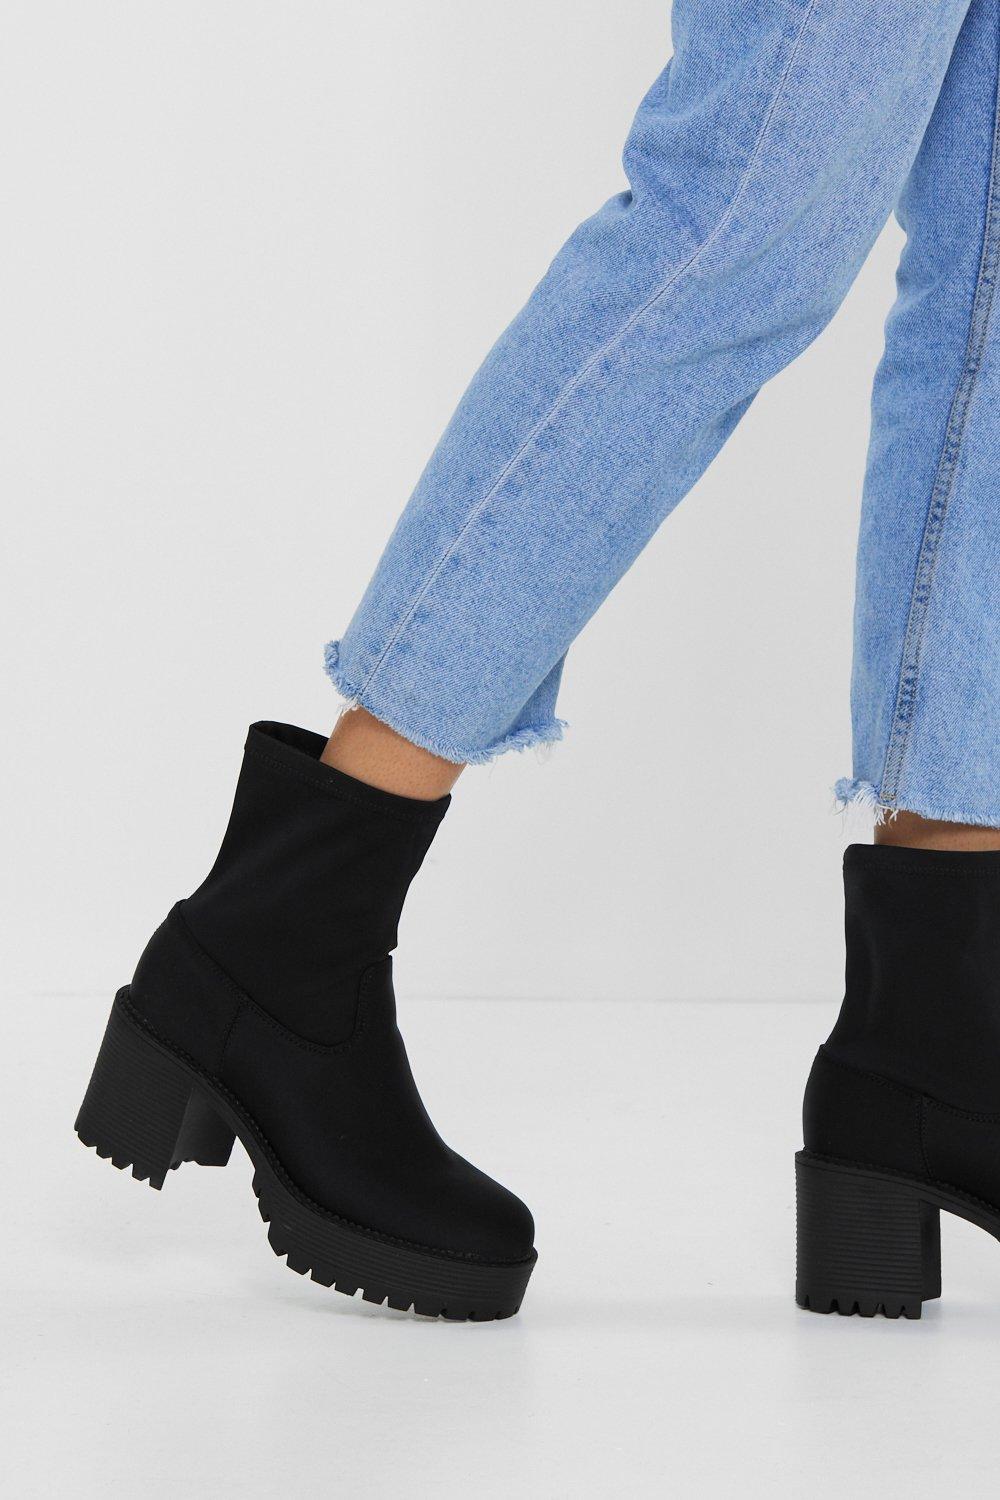 black platform sock boots